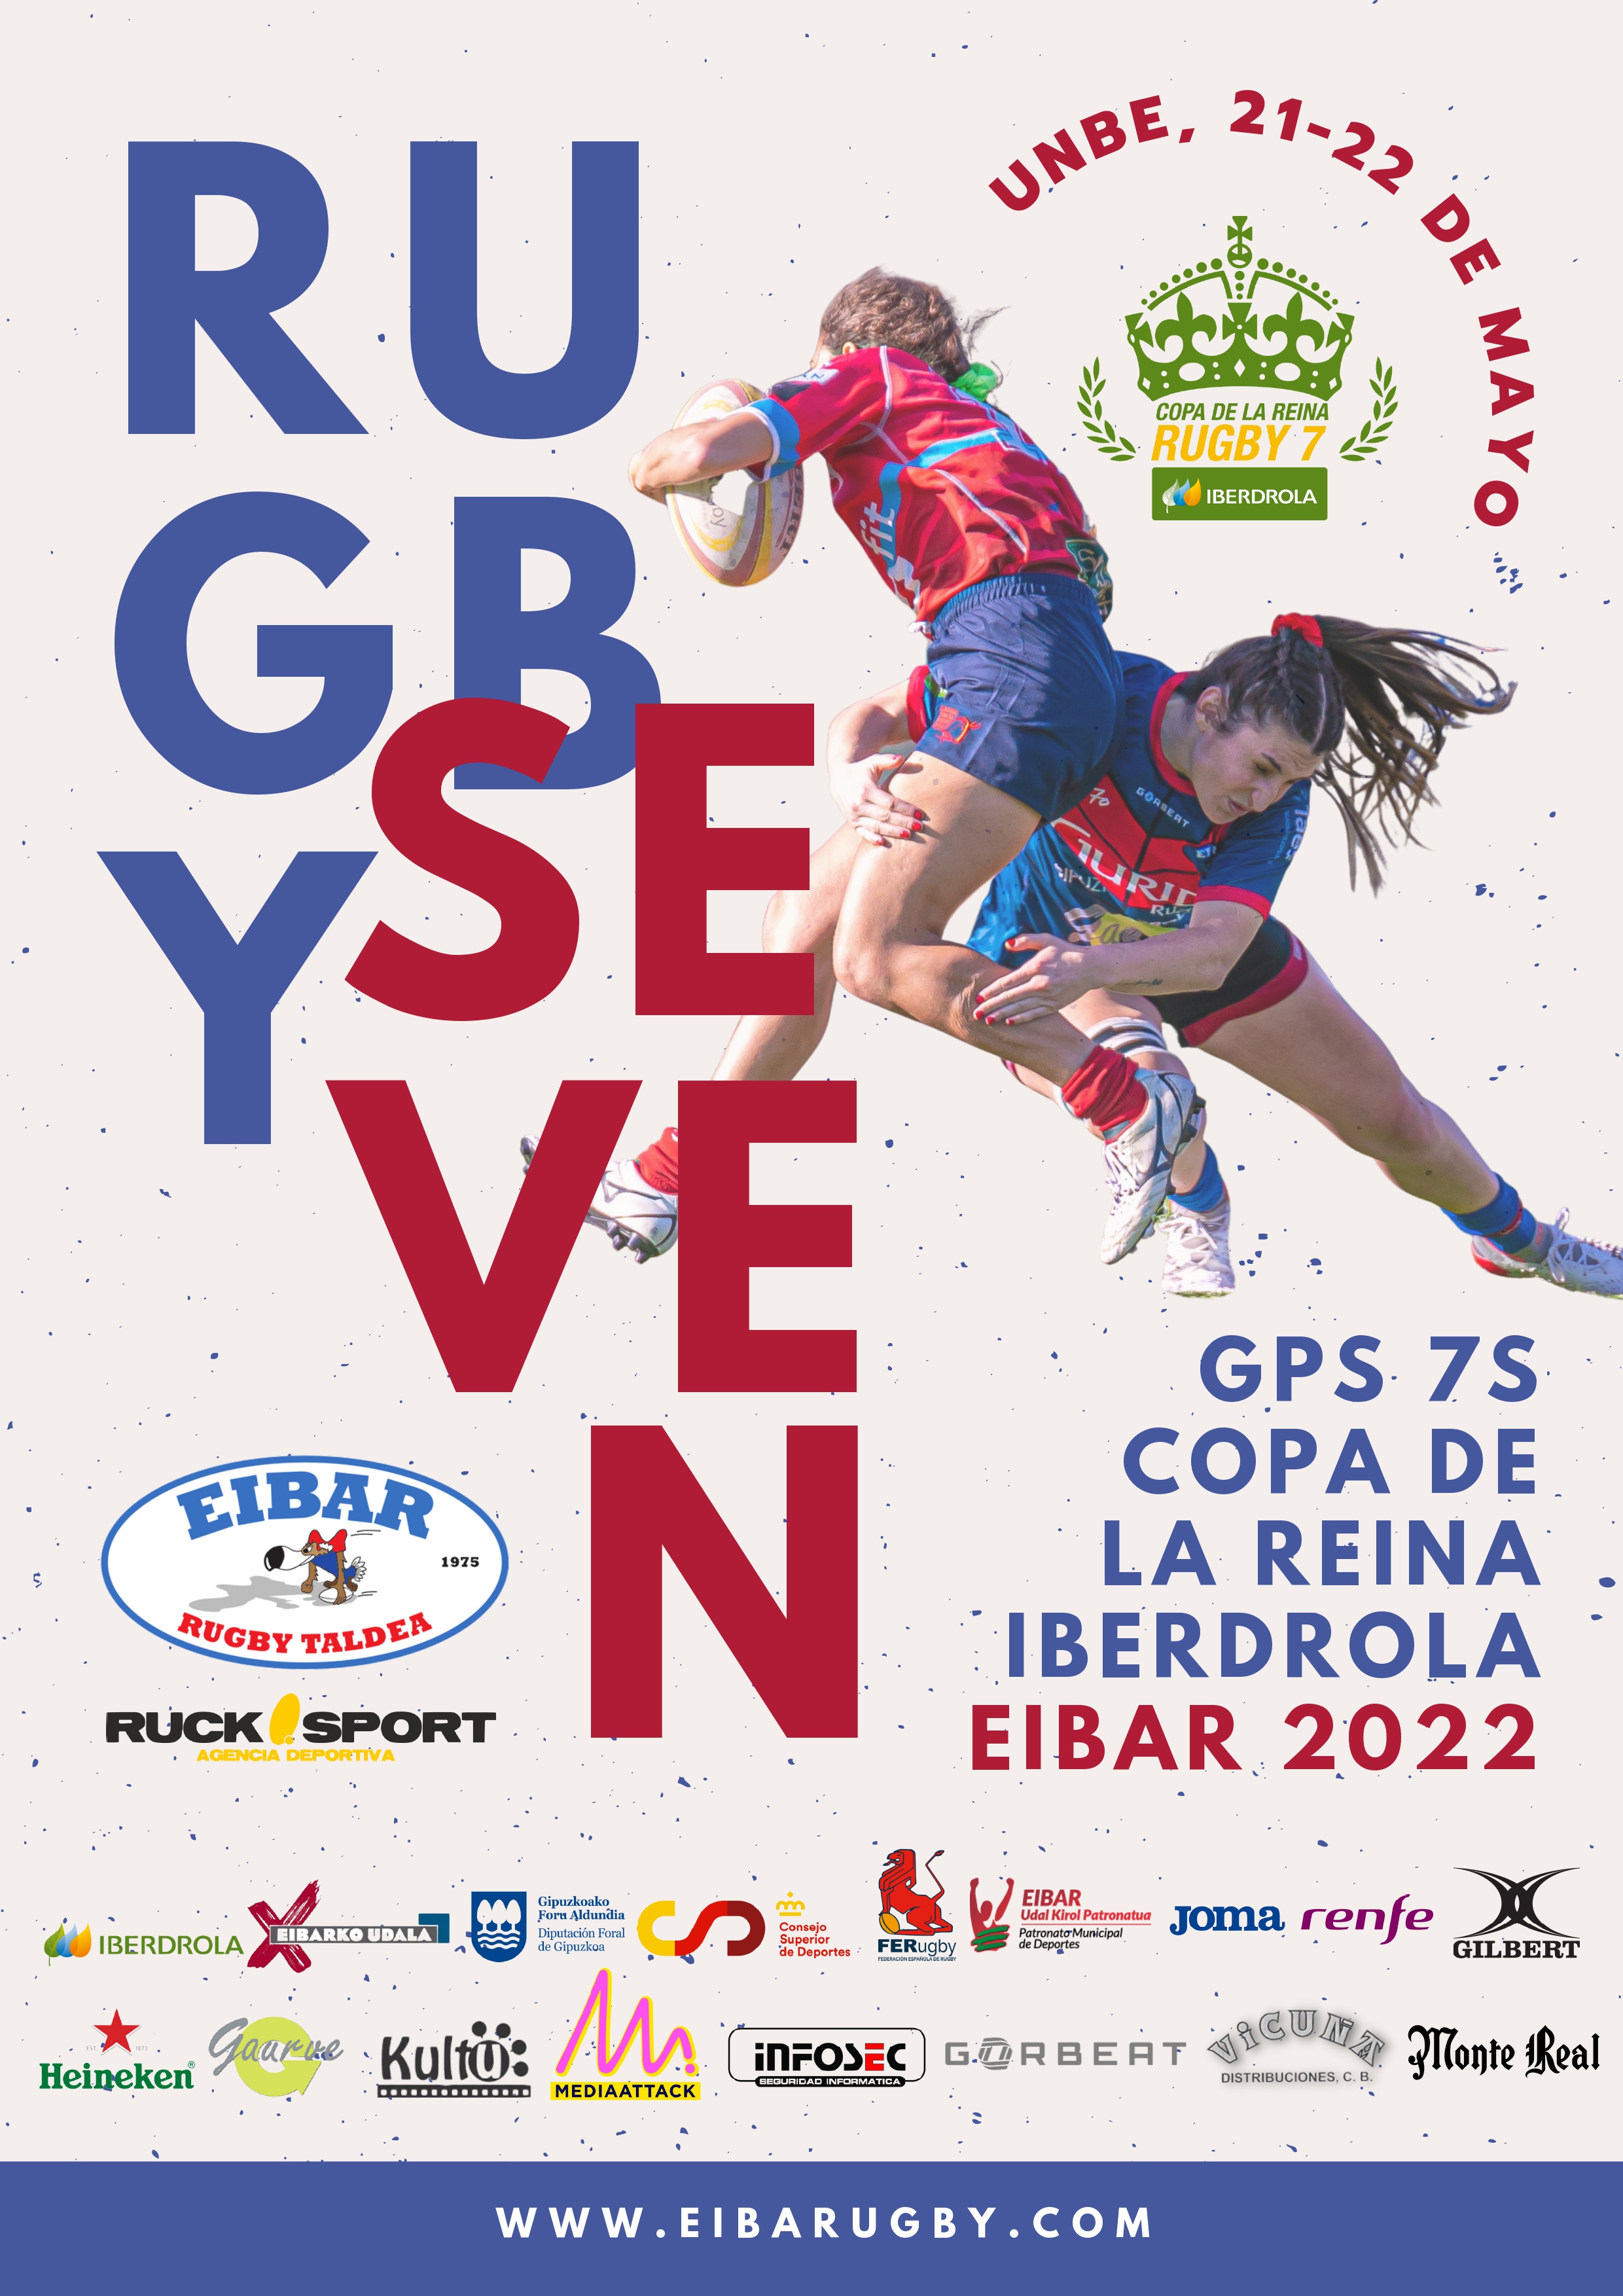 Eibar Rugby taldea nos invita a la copa de la reina